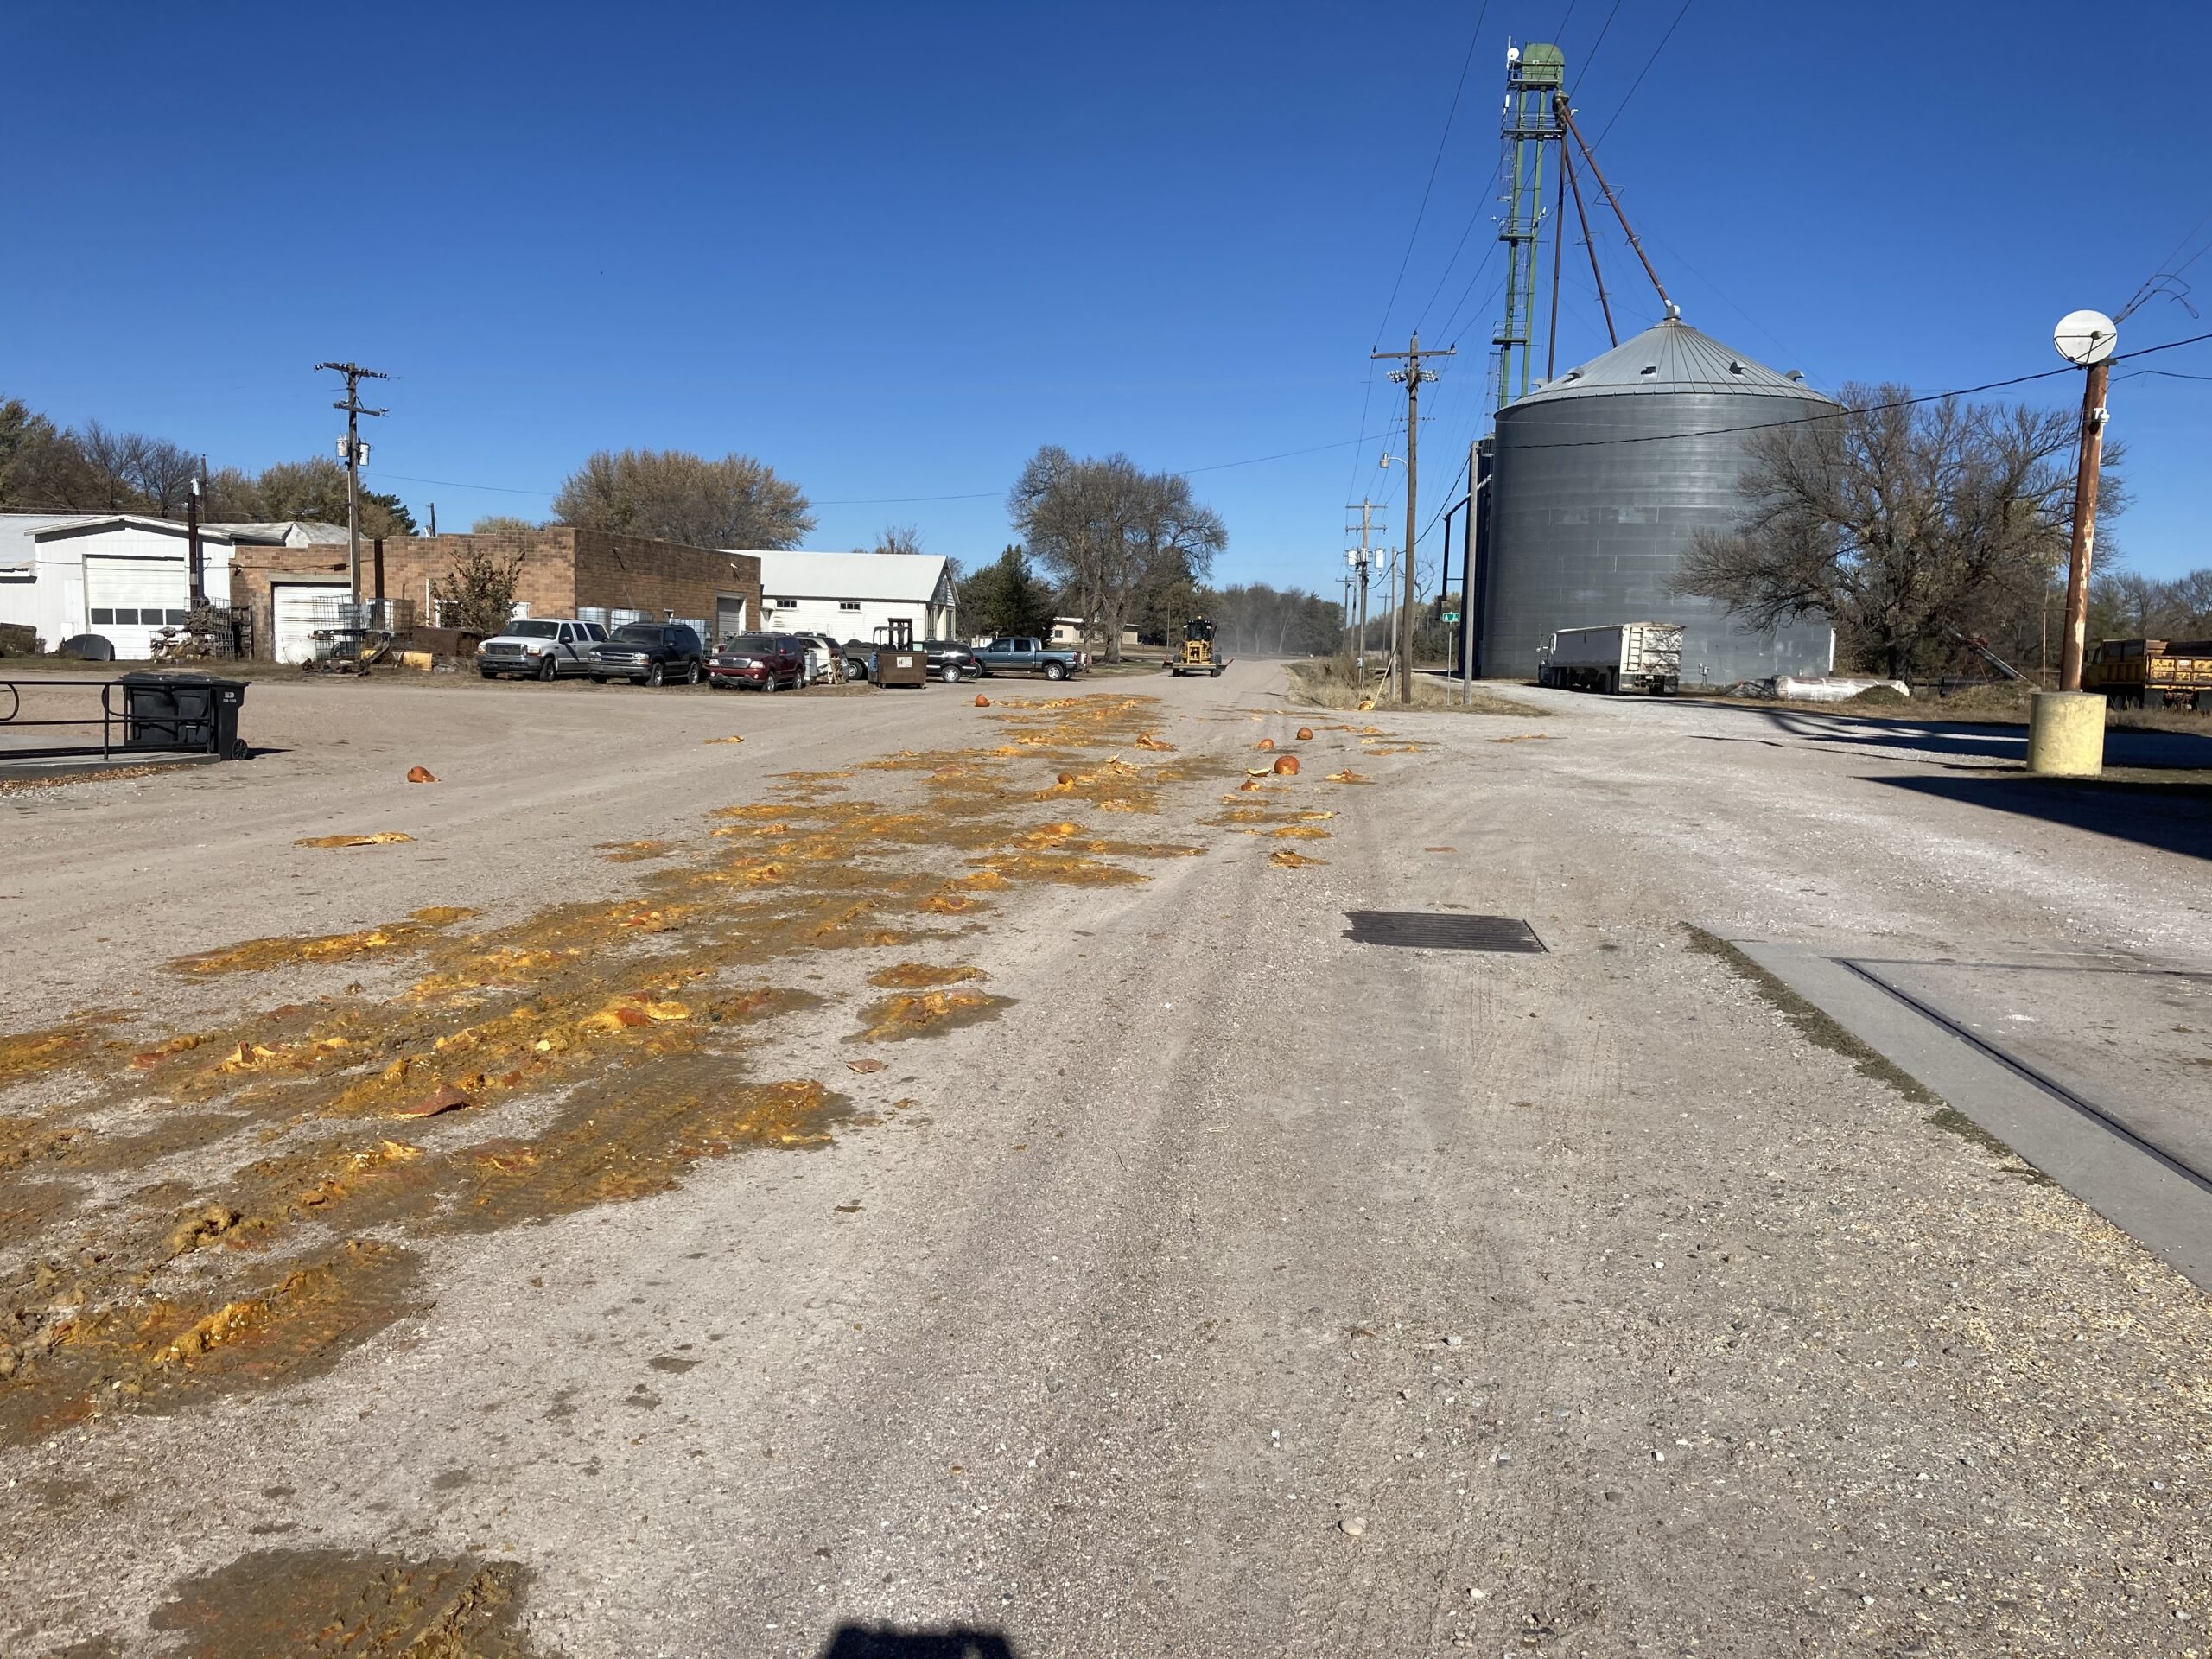 Smashed pumpkins on the road